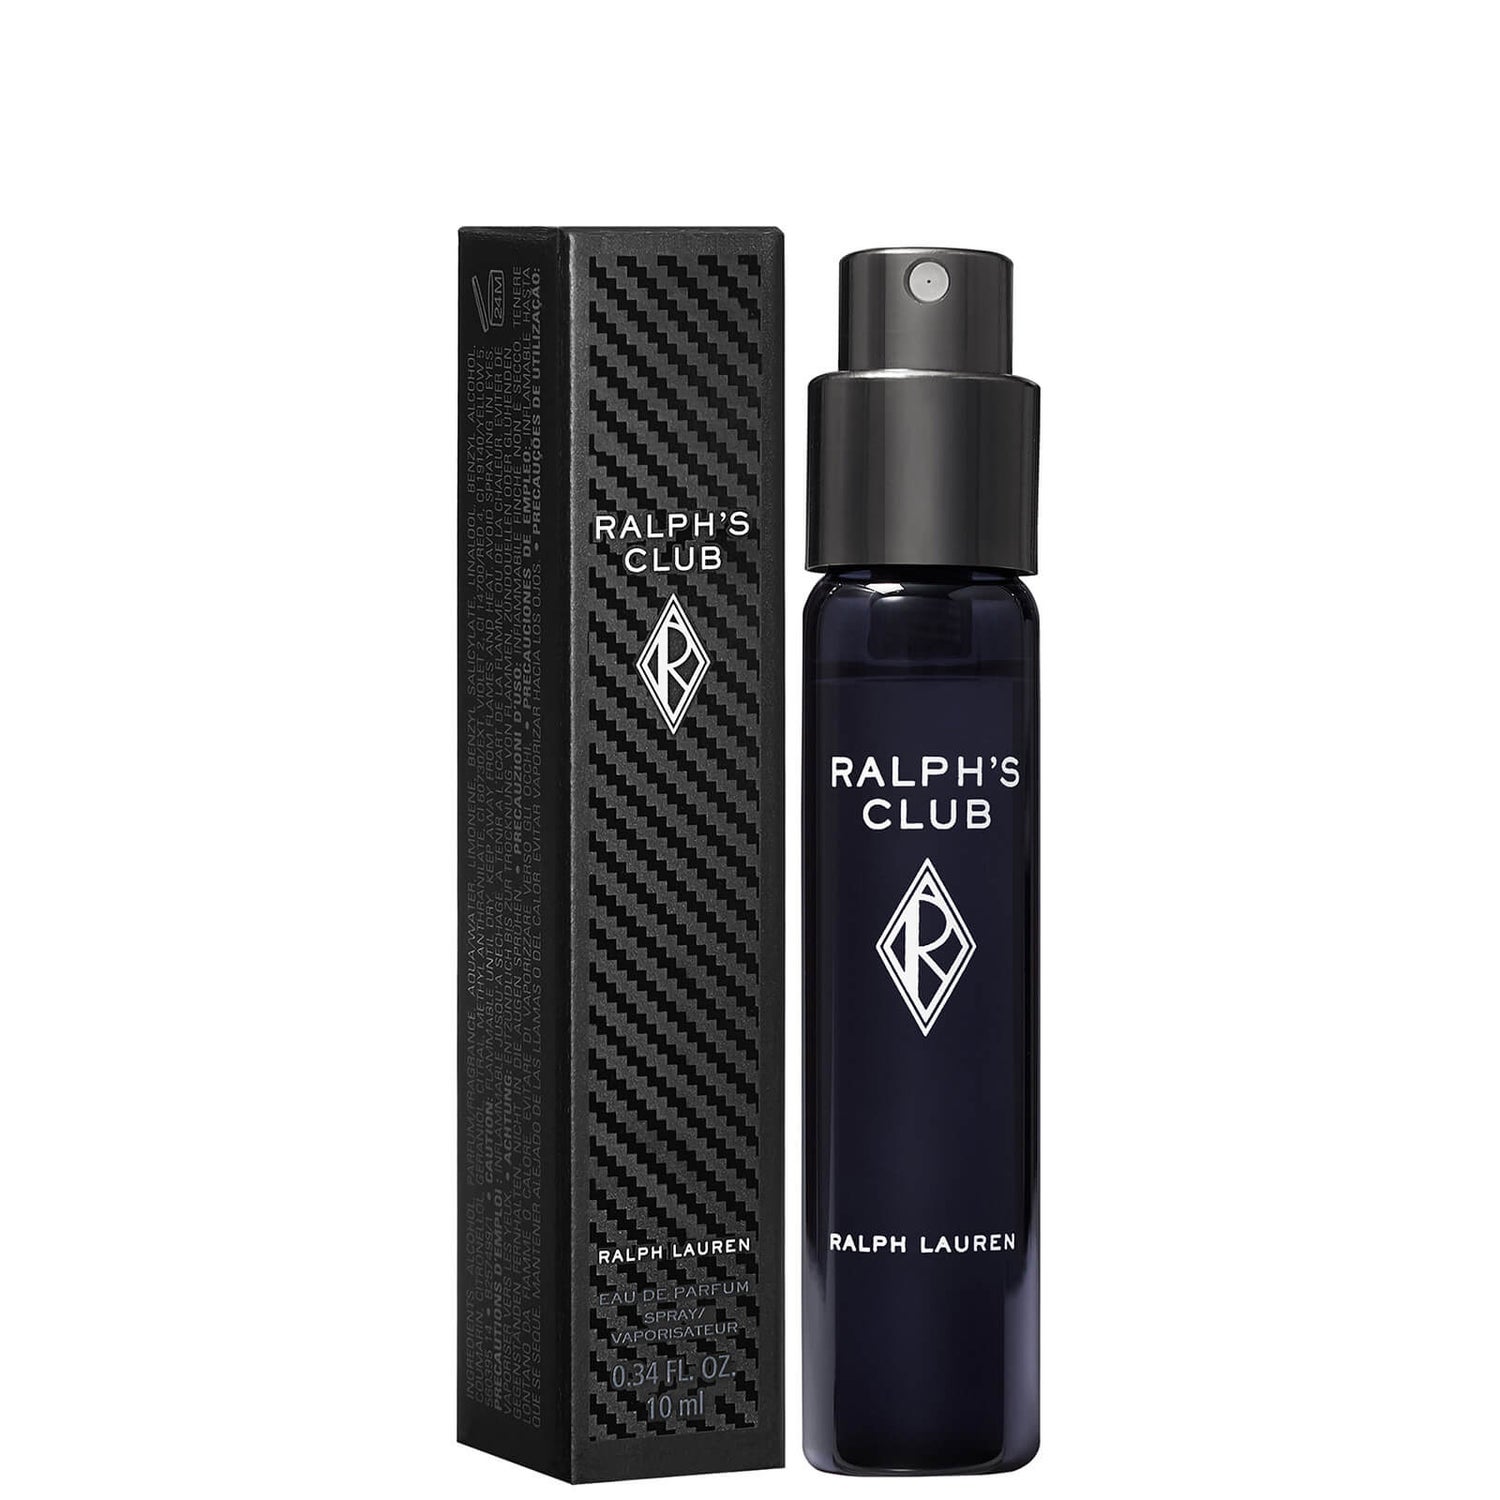 Ralph Lauren Ralph's Club Eau de Parfum 10ml - LOOKFANTASTIC